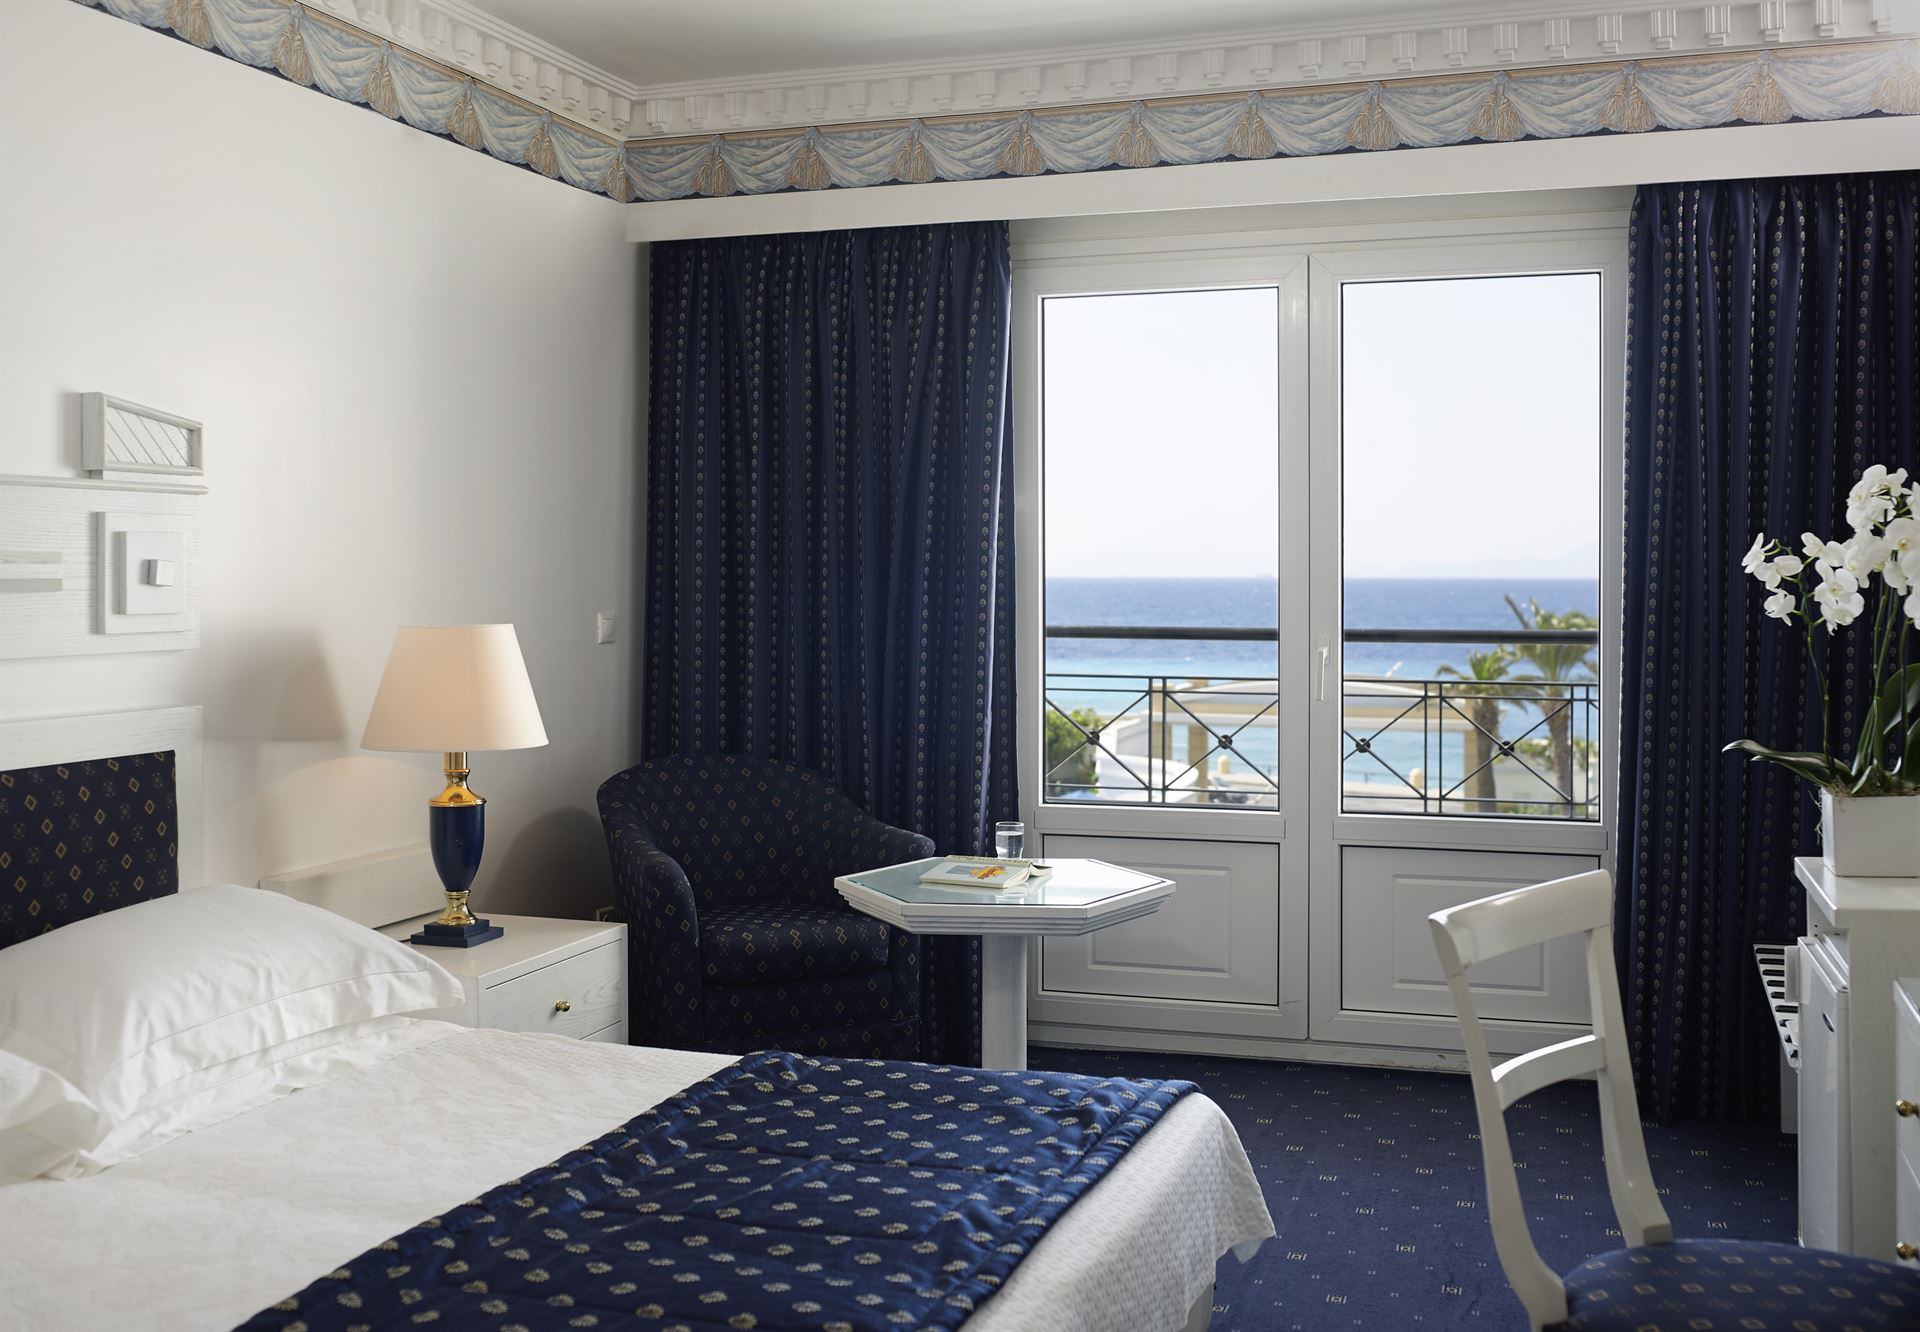 Mitsis Grand Hotel Beach Hotel: Double